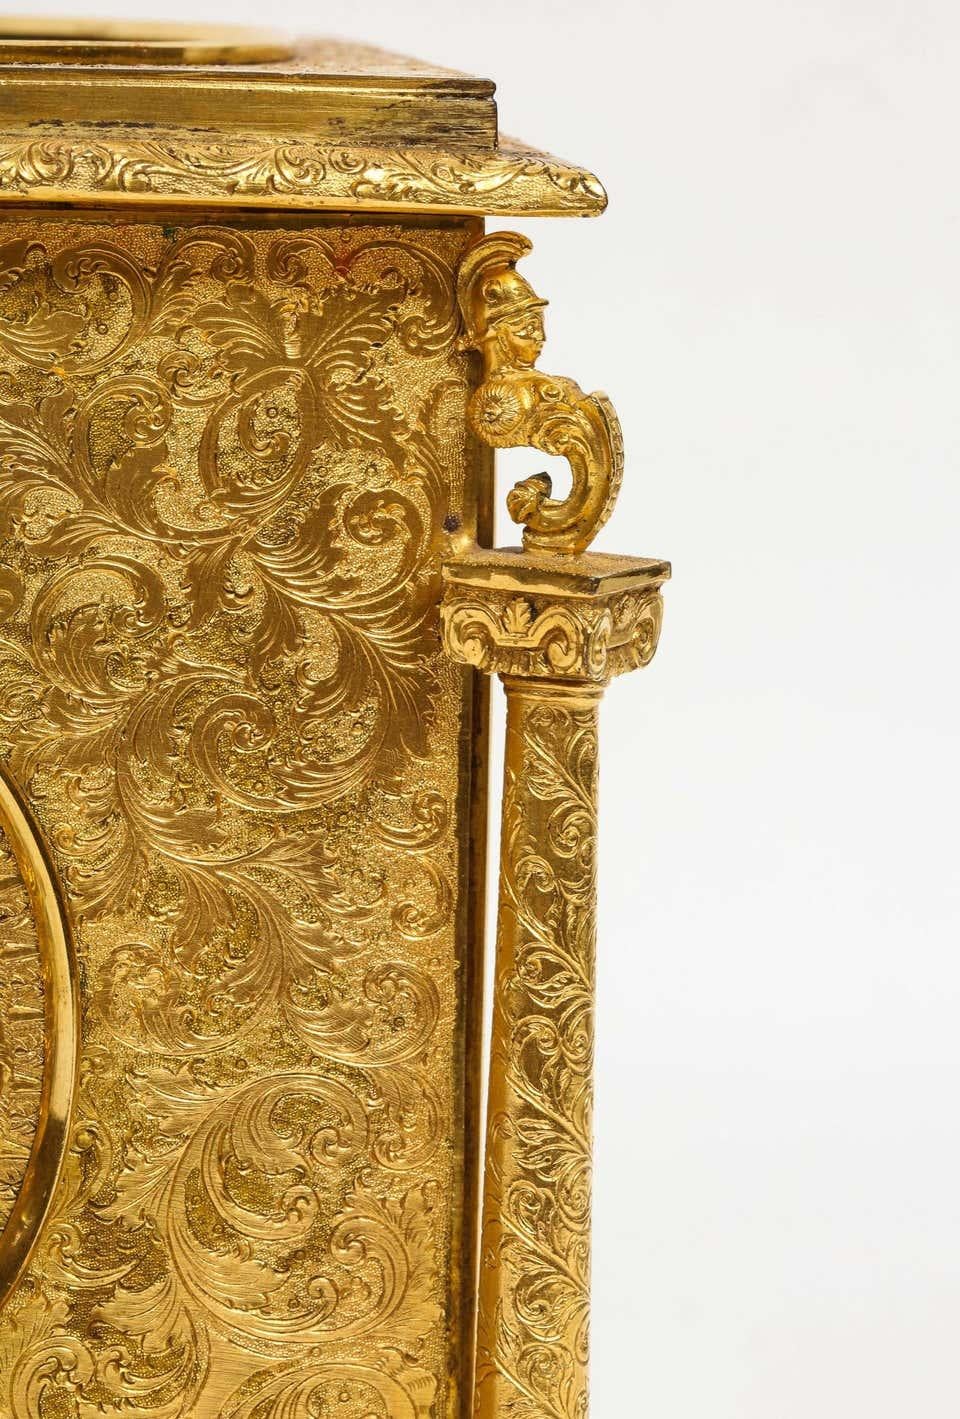 Exquisite Quality Napoleon III Engraved Ormolu and Malachite Perfume Bottle Box 2